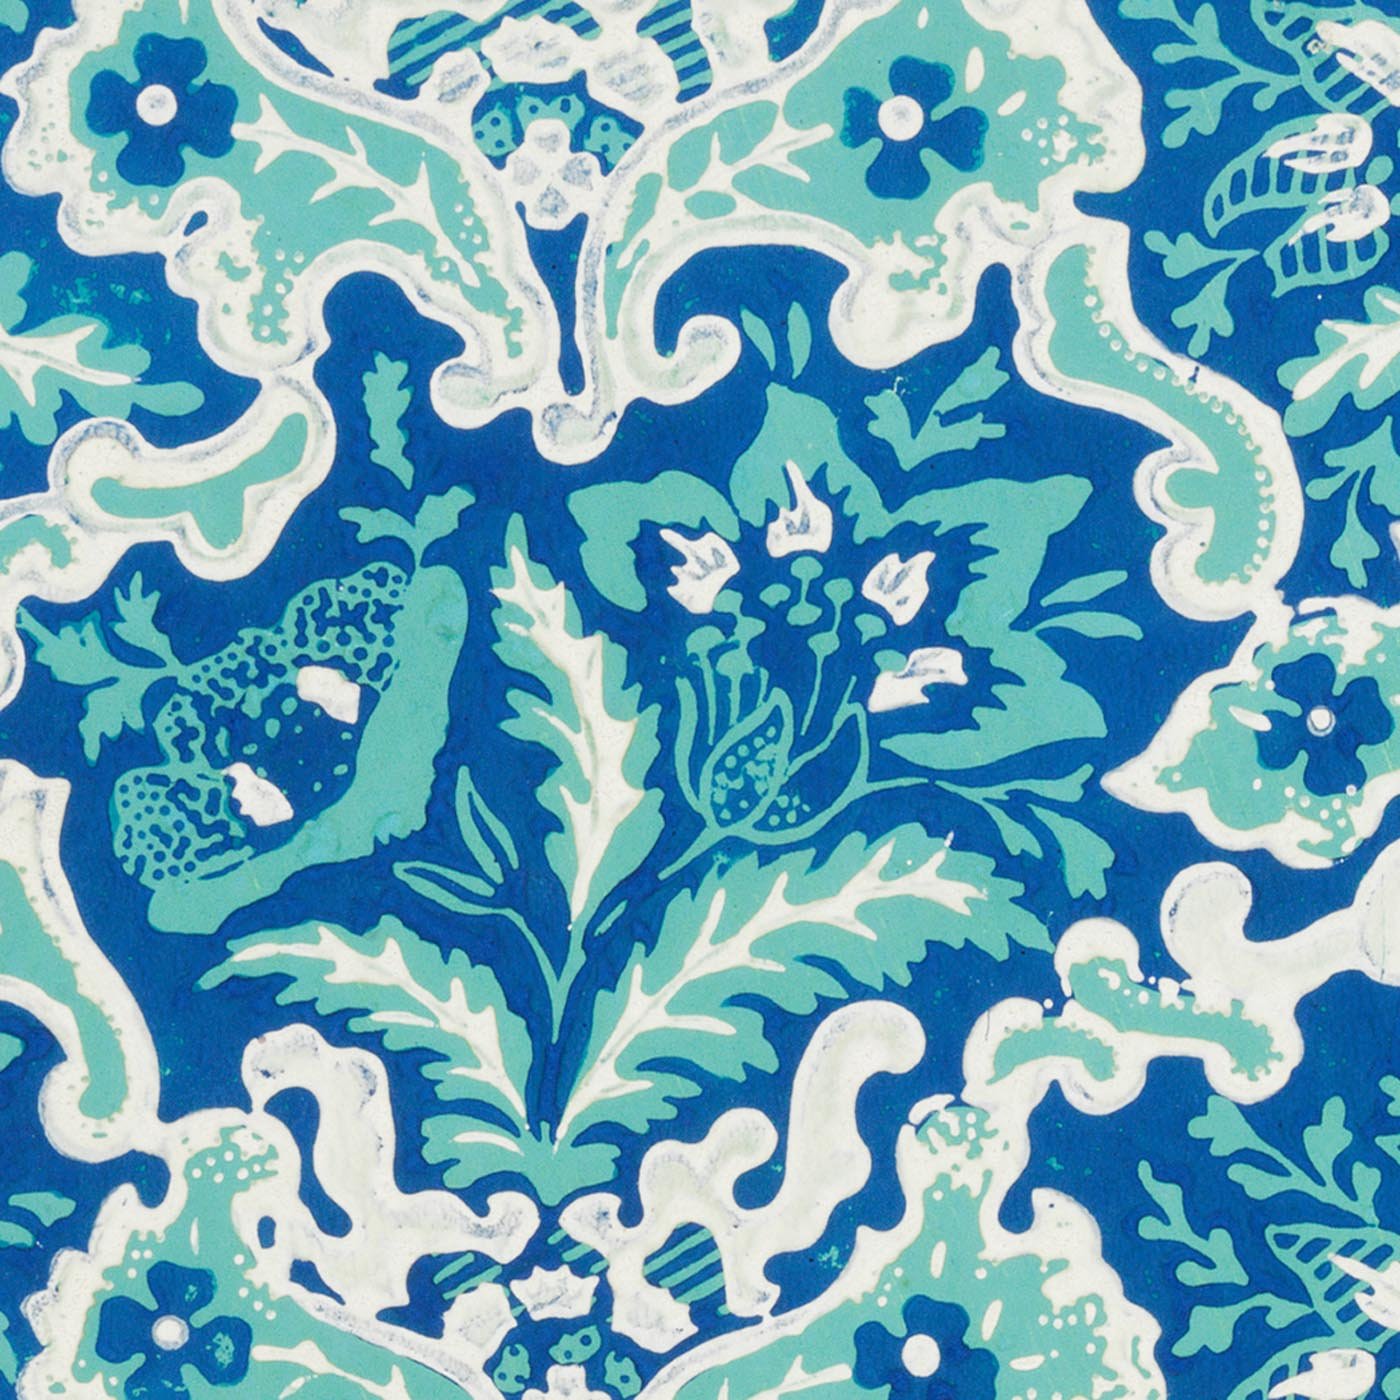 William Morris Vintage Floral Wallpaper Art Exhibition Poster